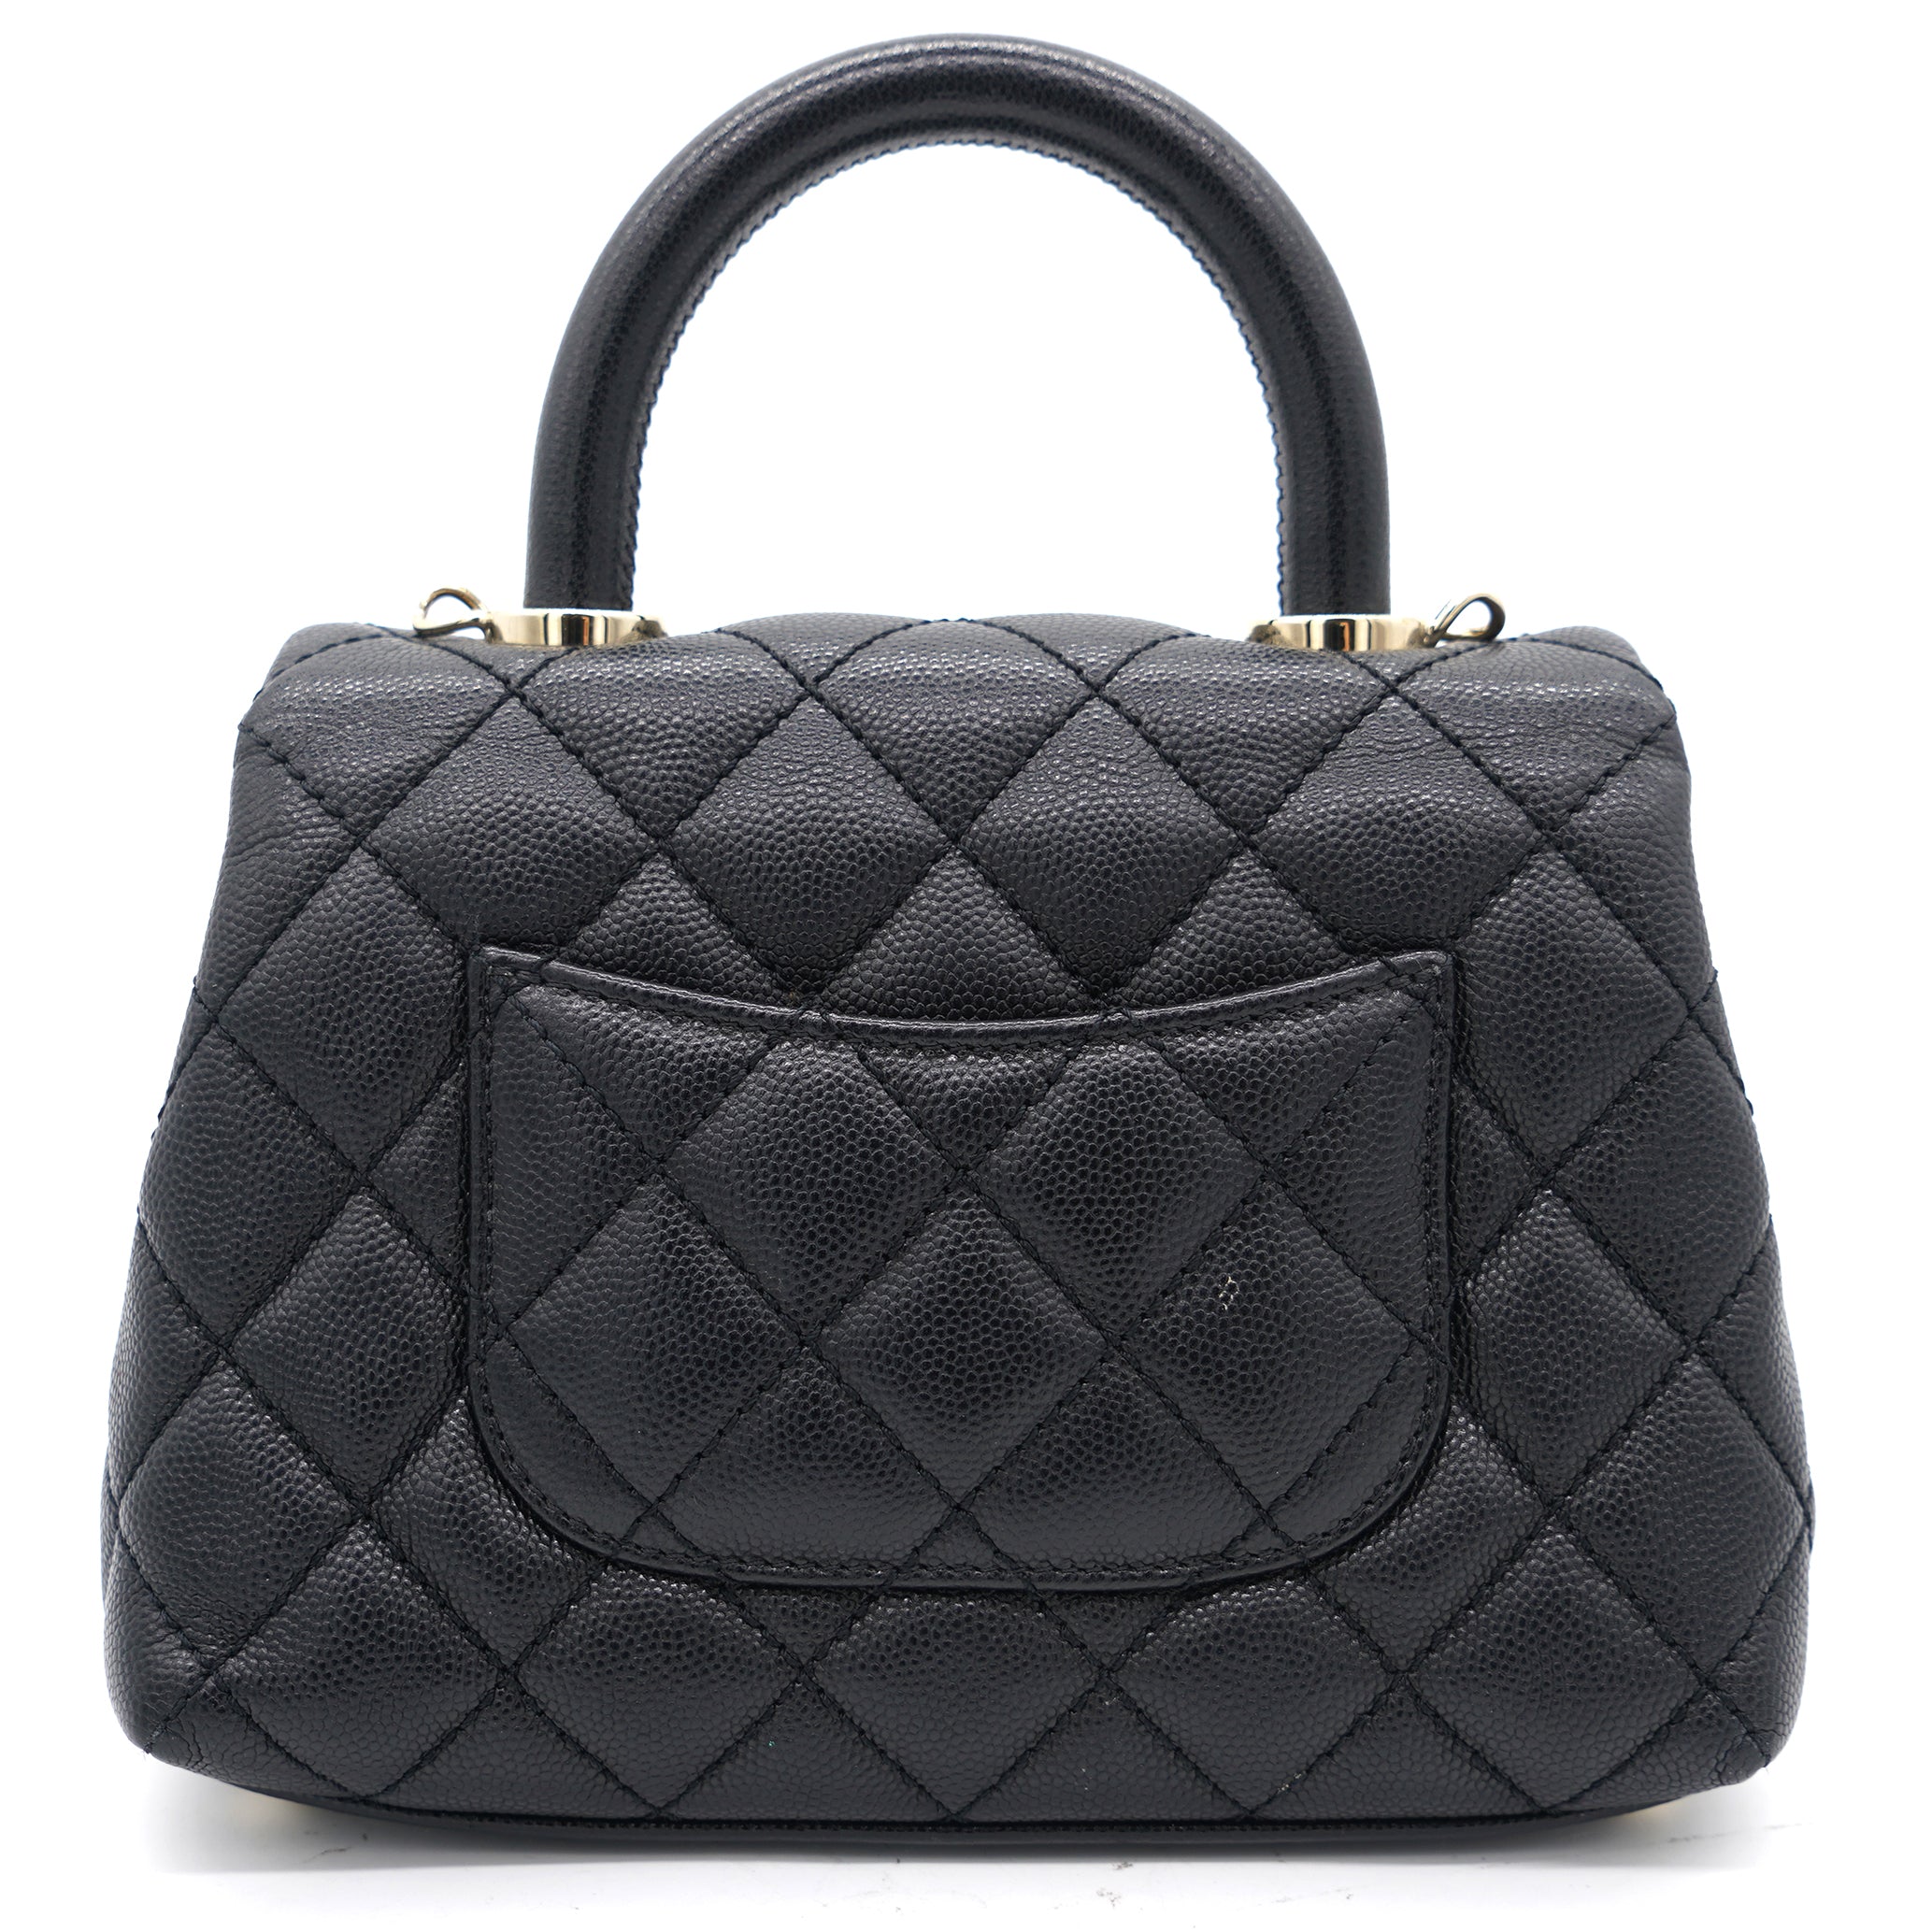 Authenticating your Chanel or Hermès handbag